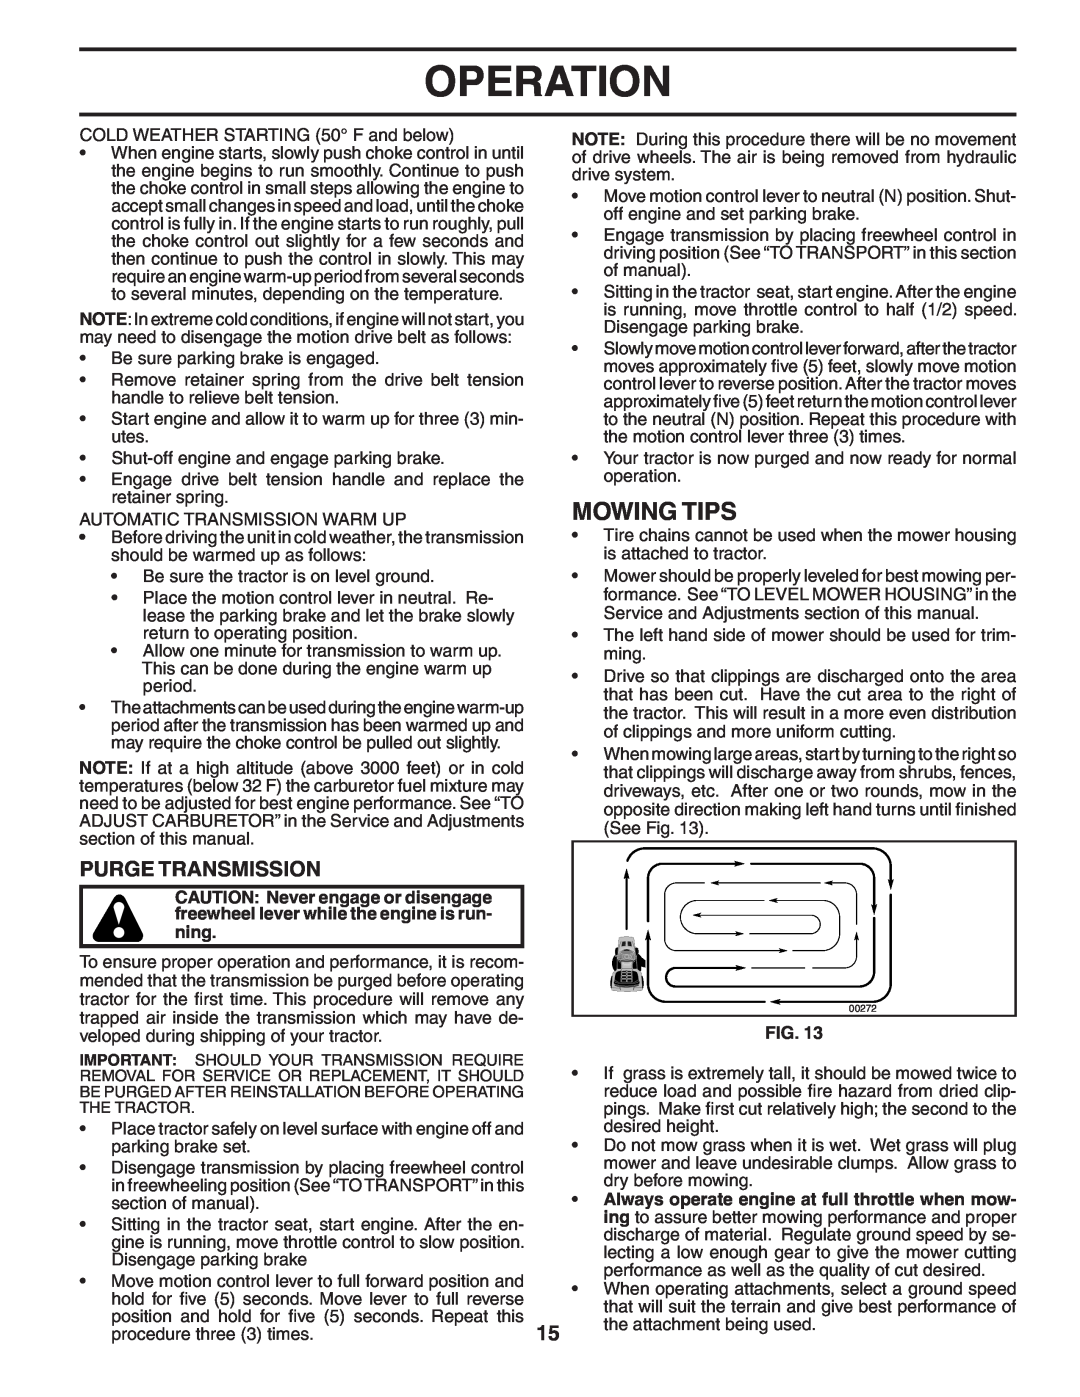 Poulan PKGTH2554 manual Mowing Tips, Purge Transmission, Operation 